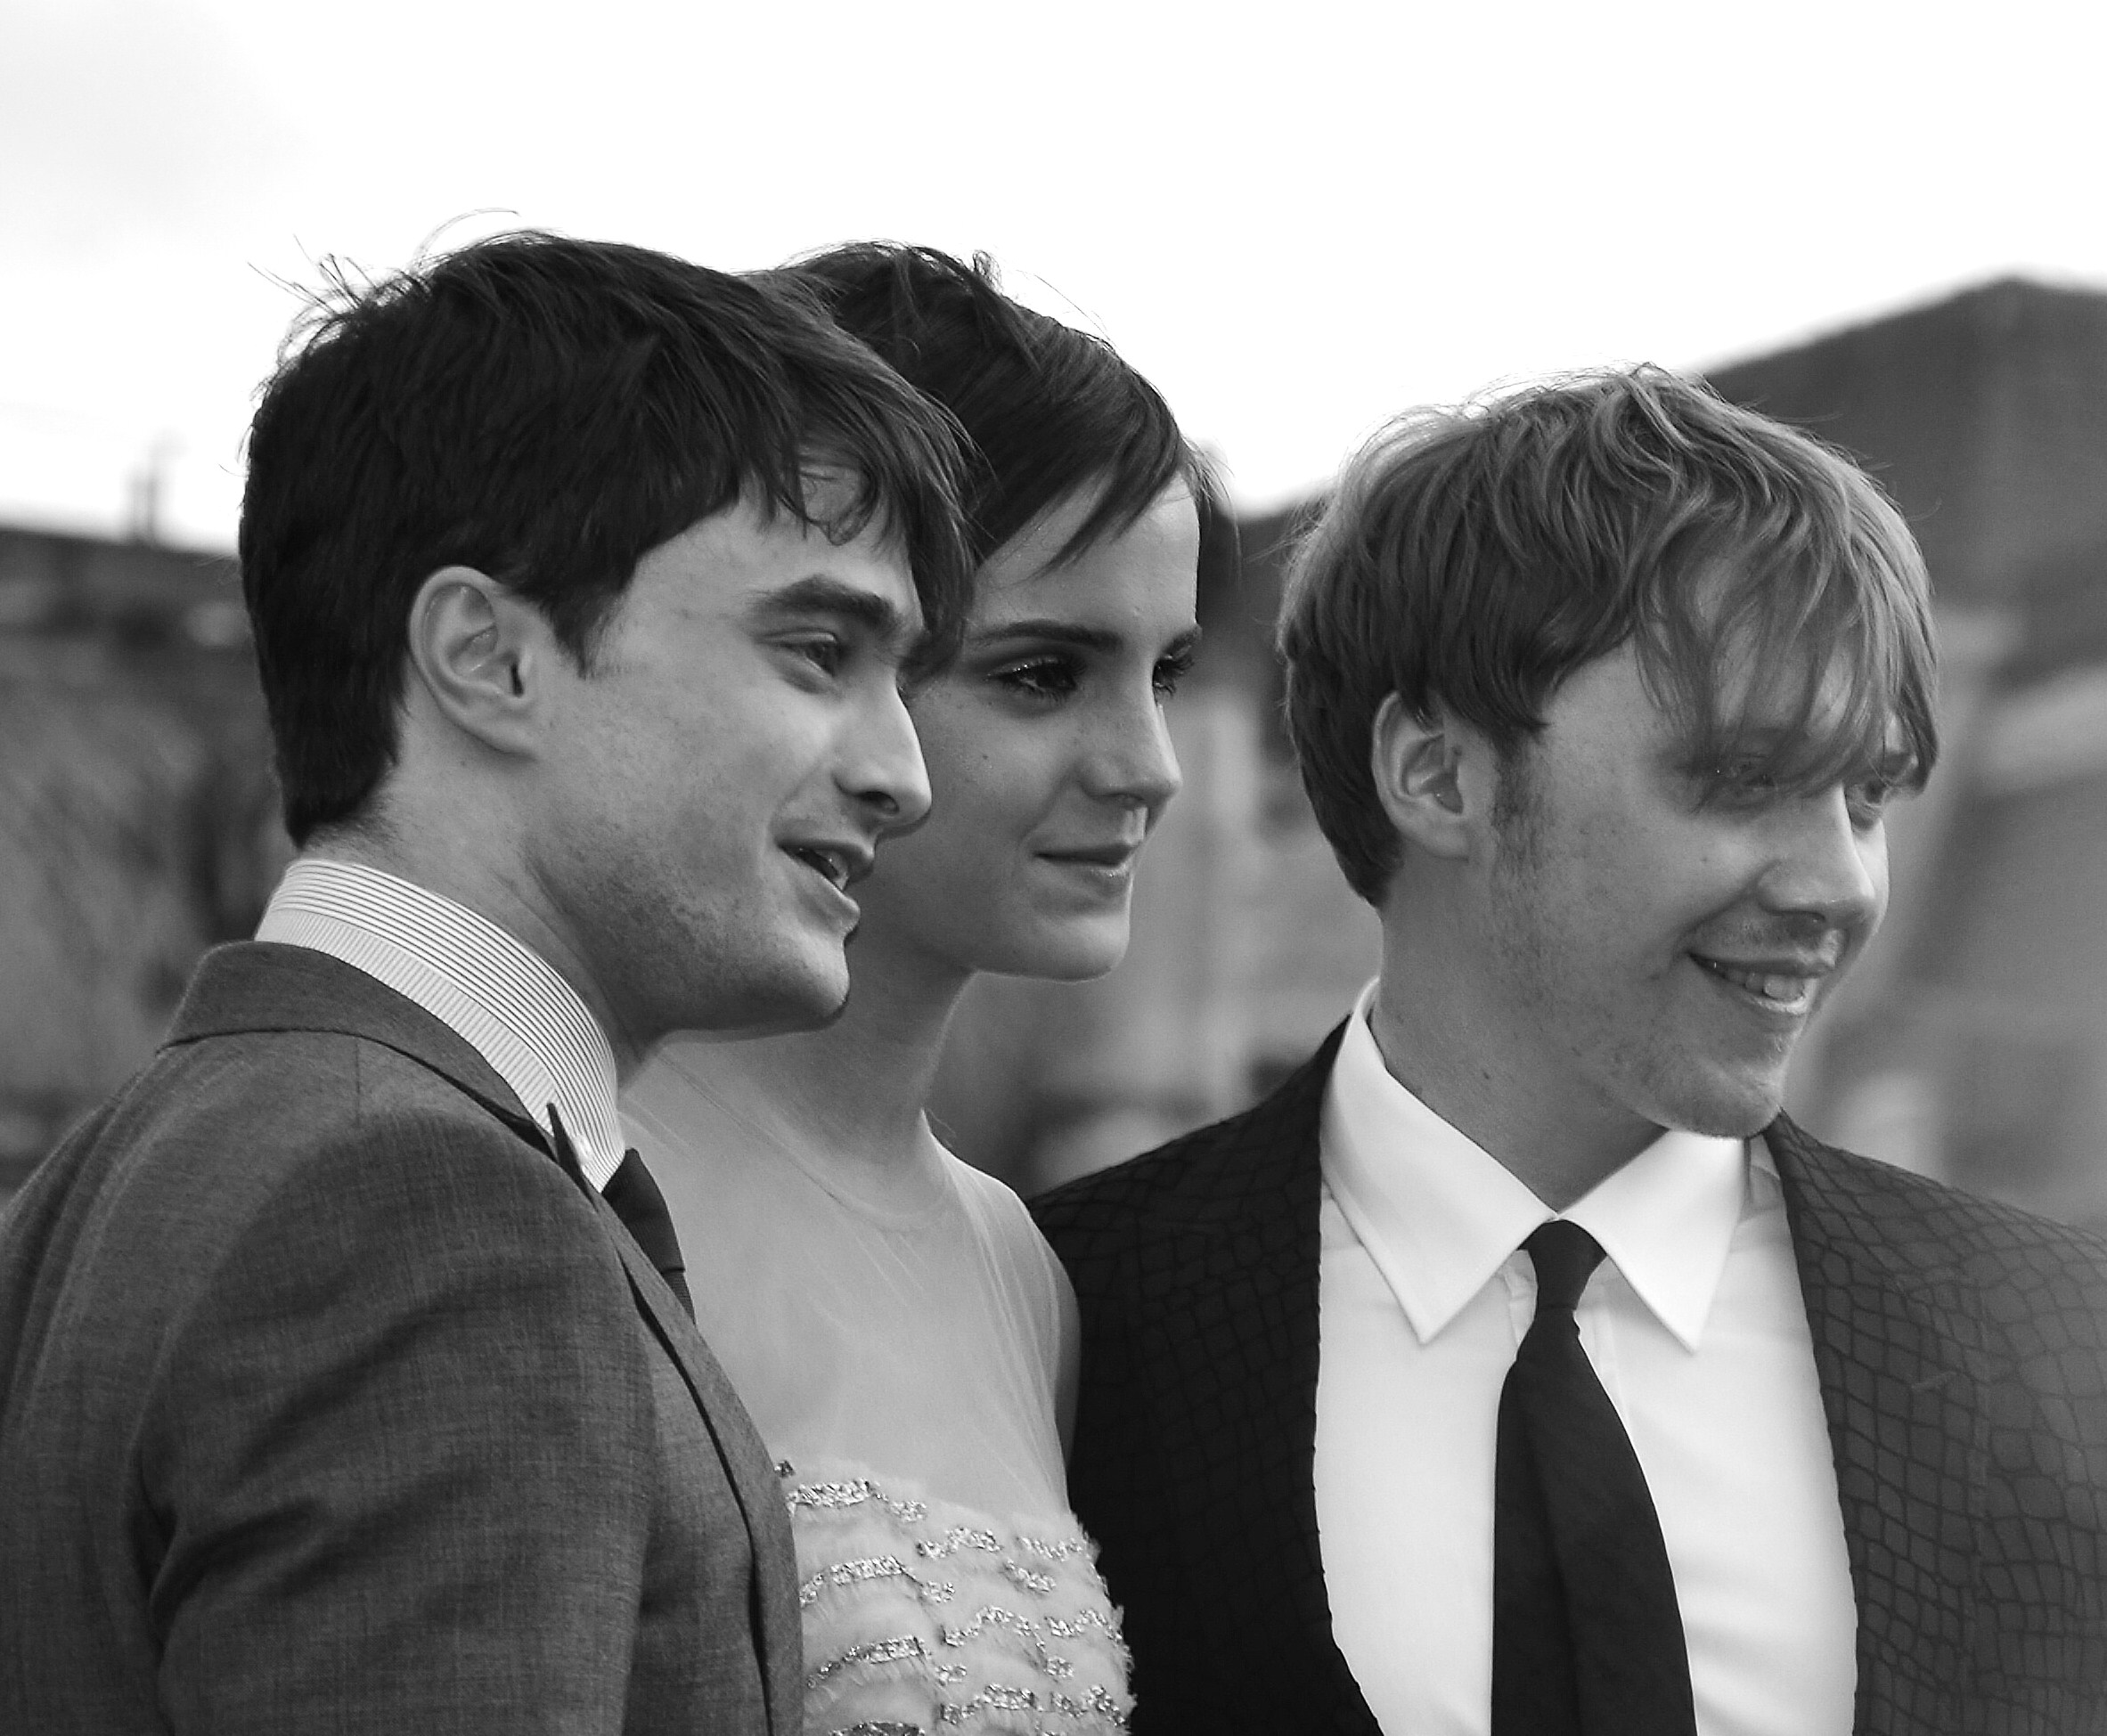 Harry Potter, è reunion: Daniel Radcliffe, Emma Watson e Rupert Grint insieme per un evento speciale